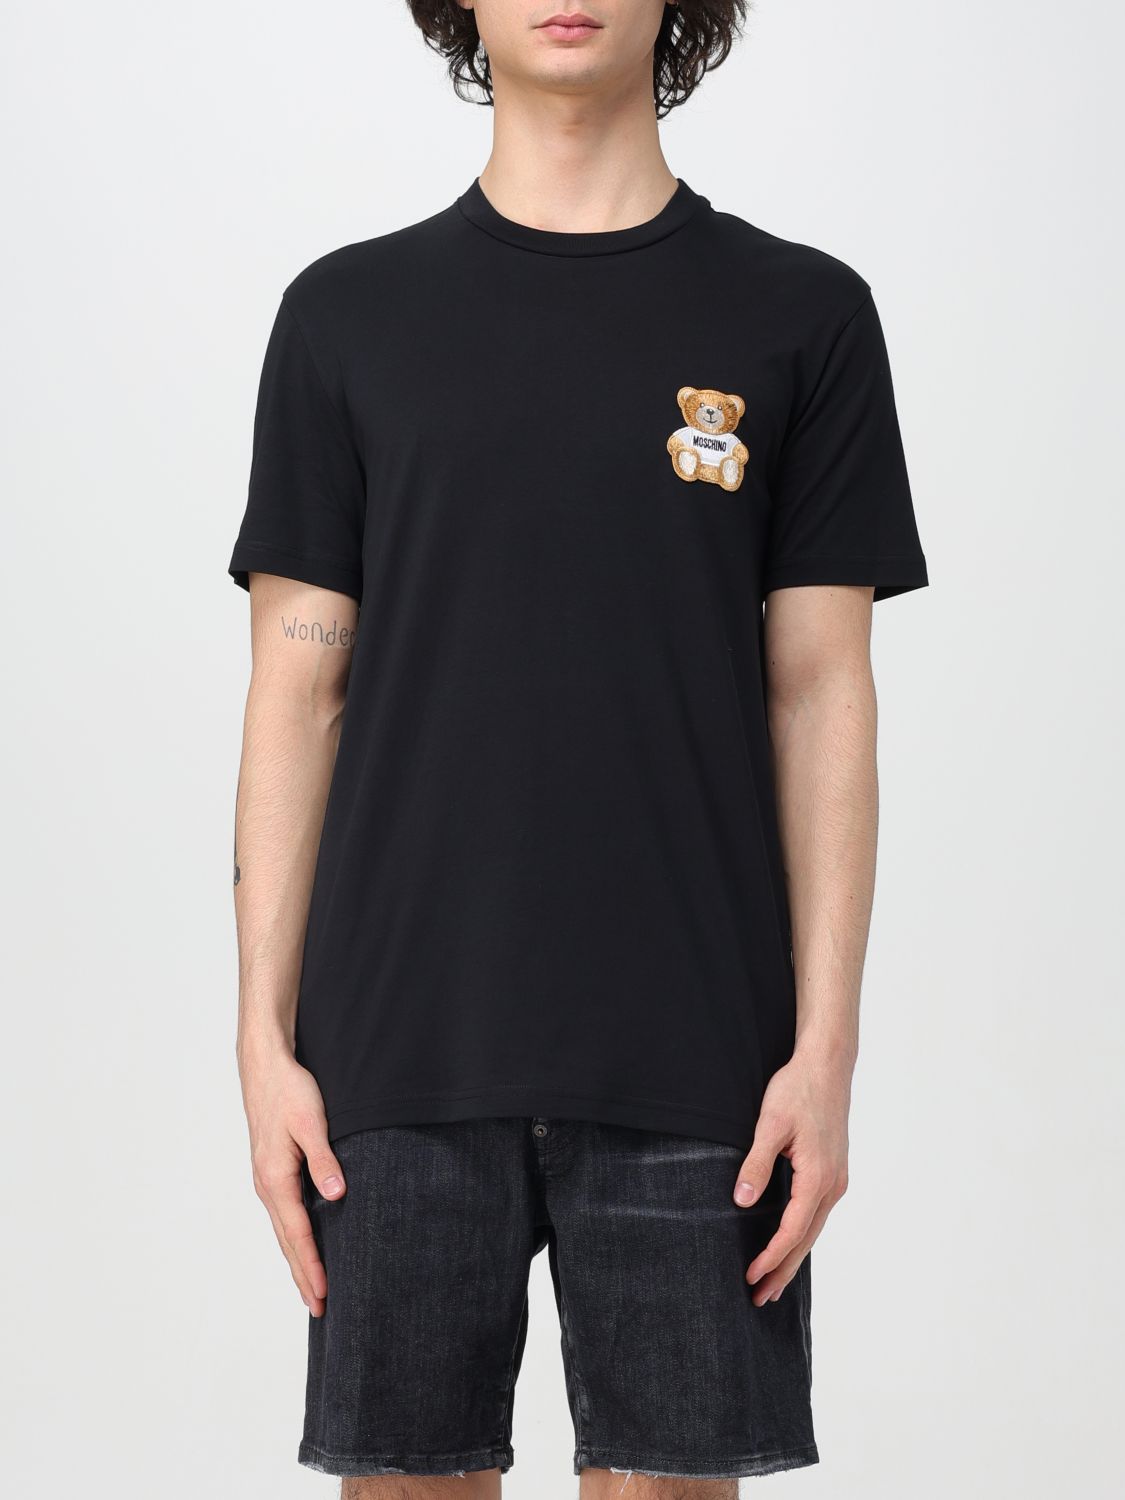 Moschino Couture T-shirt  Men Colour Black